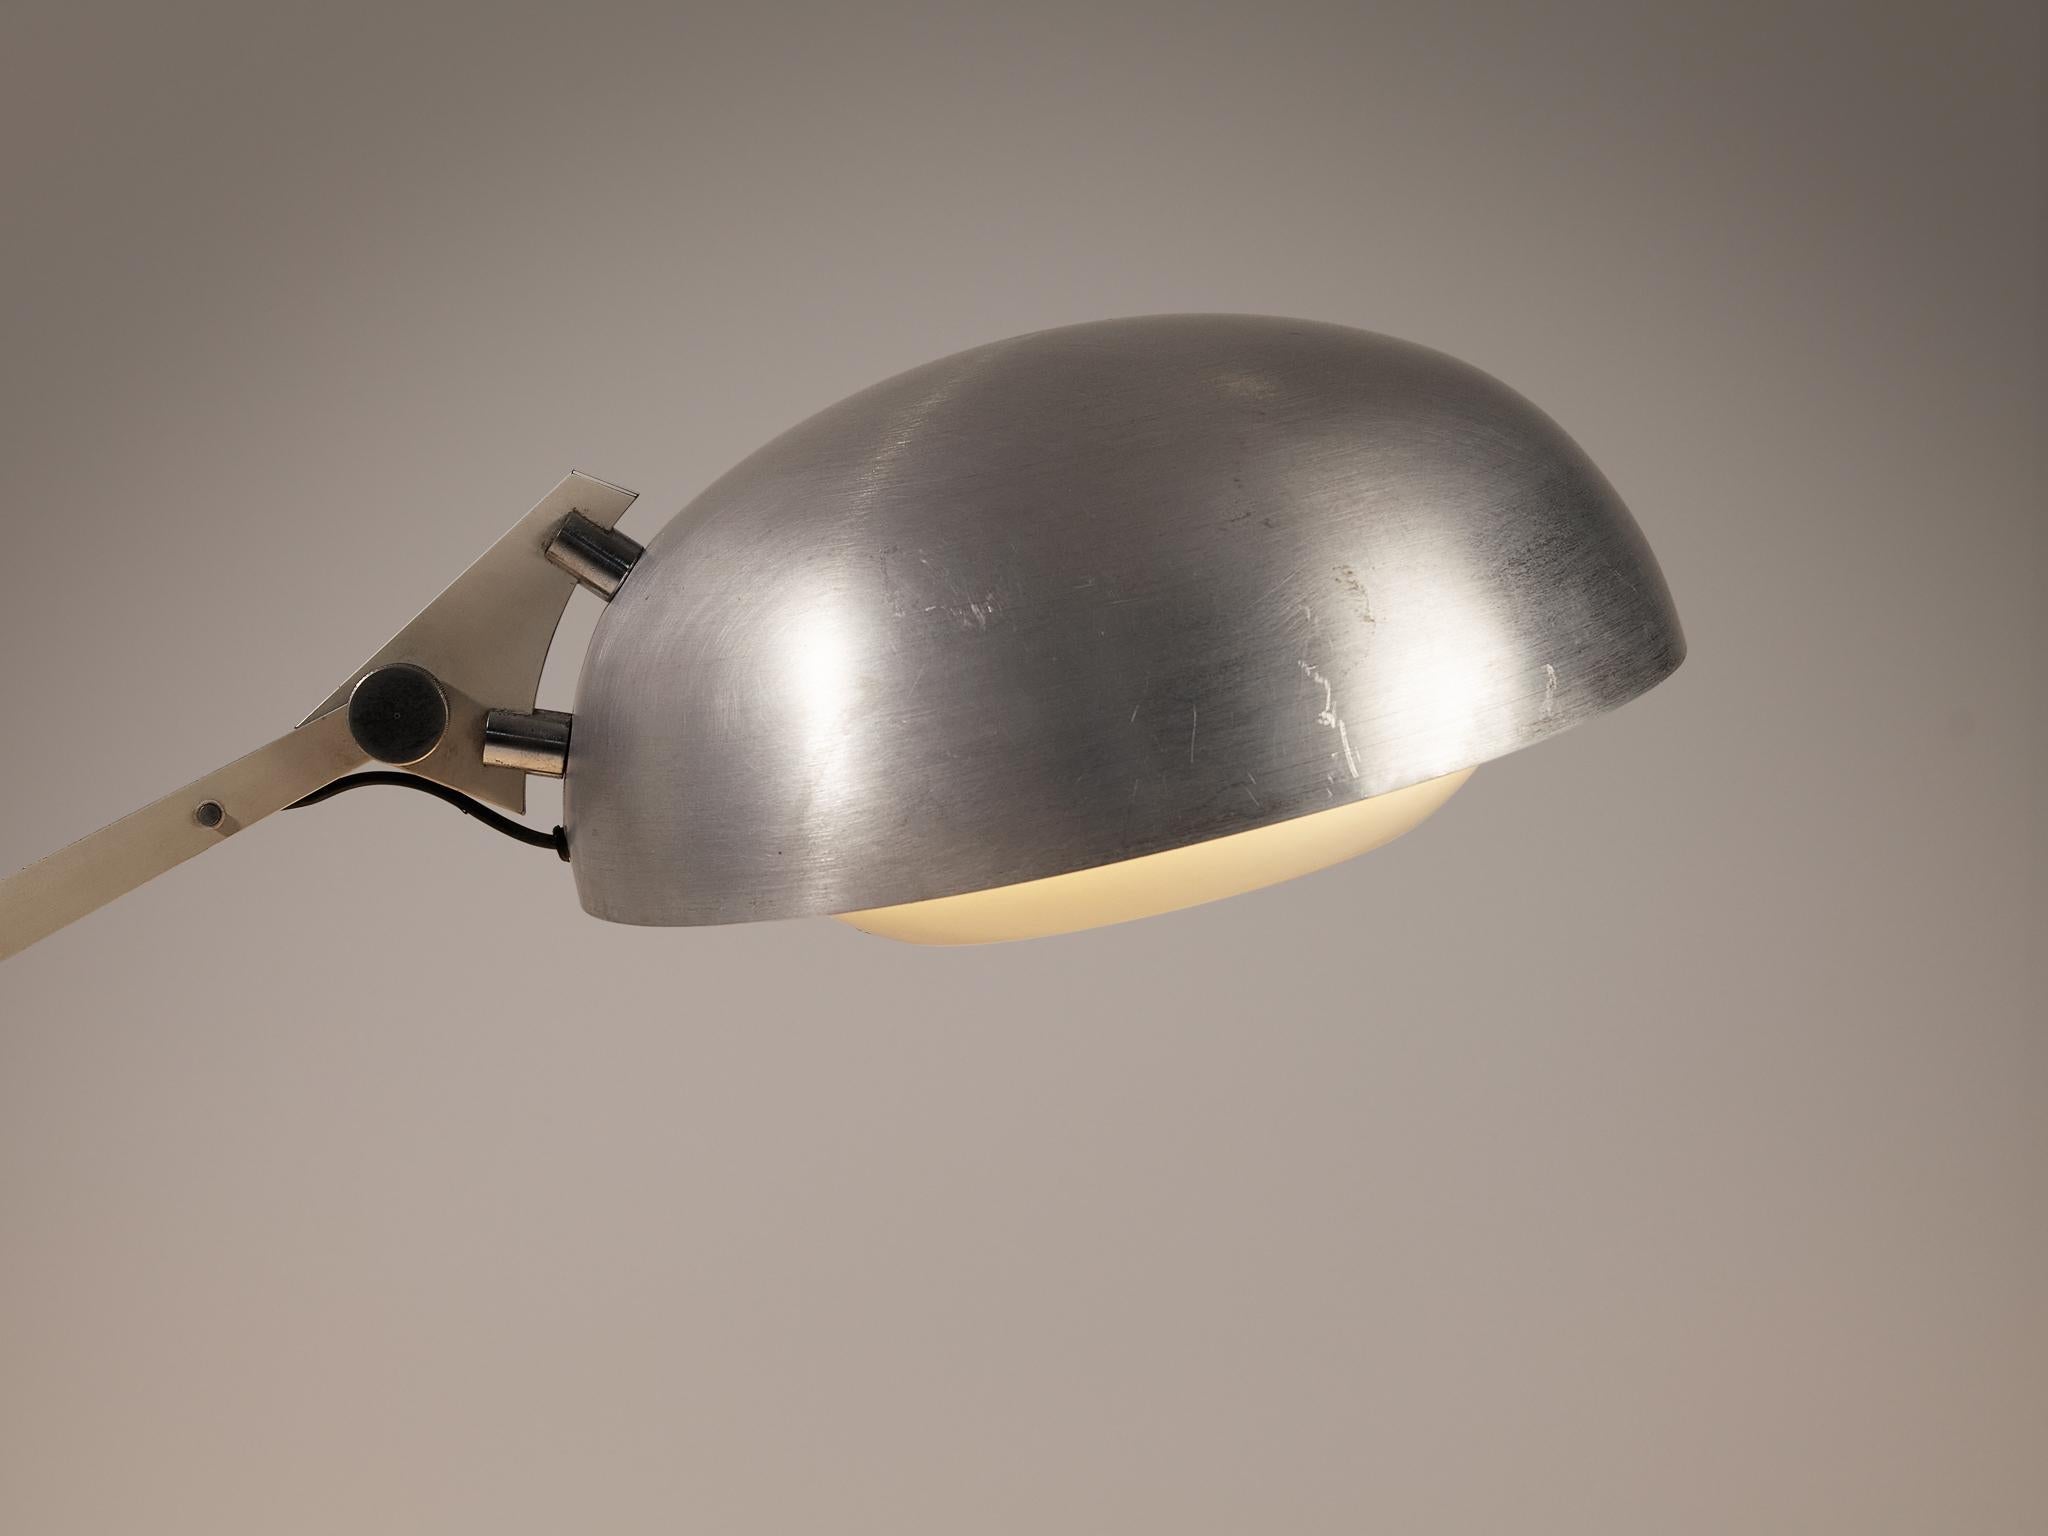 Wim Rietveld for Gispen Desk Lamp in White Coated Metal and Aluminum